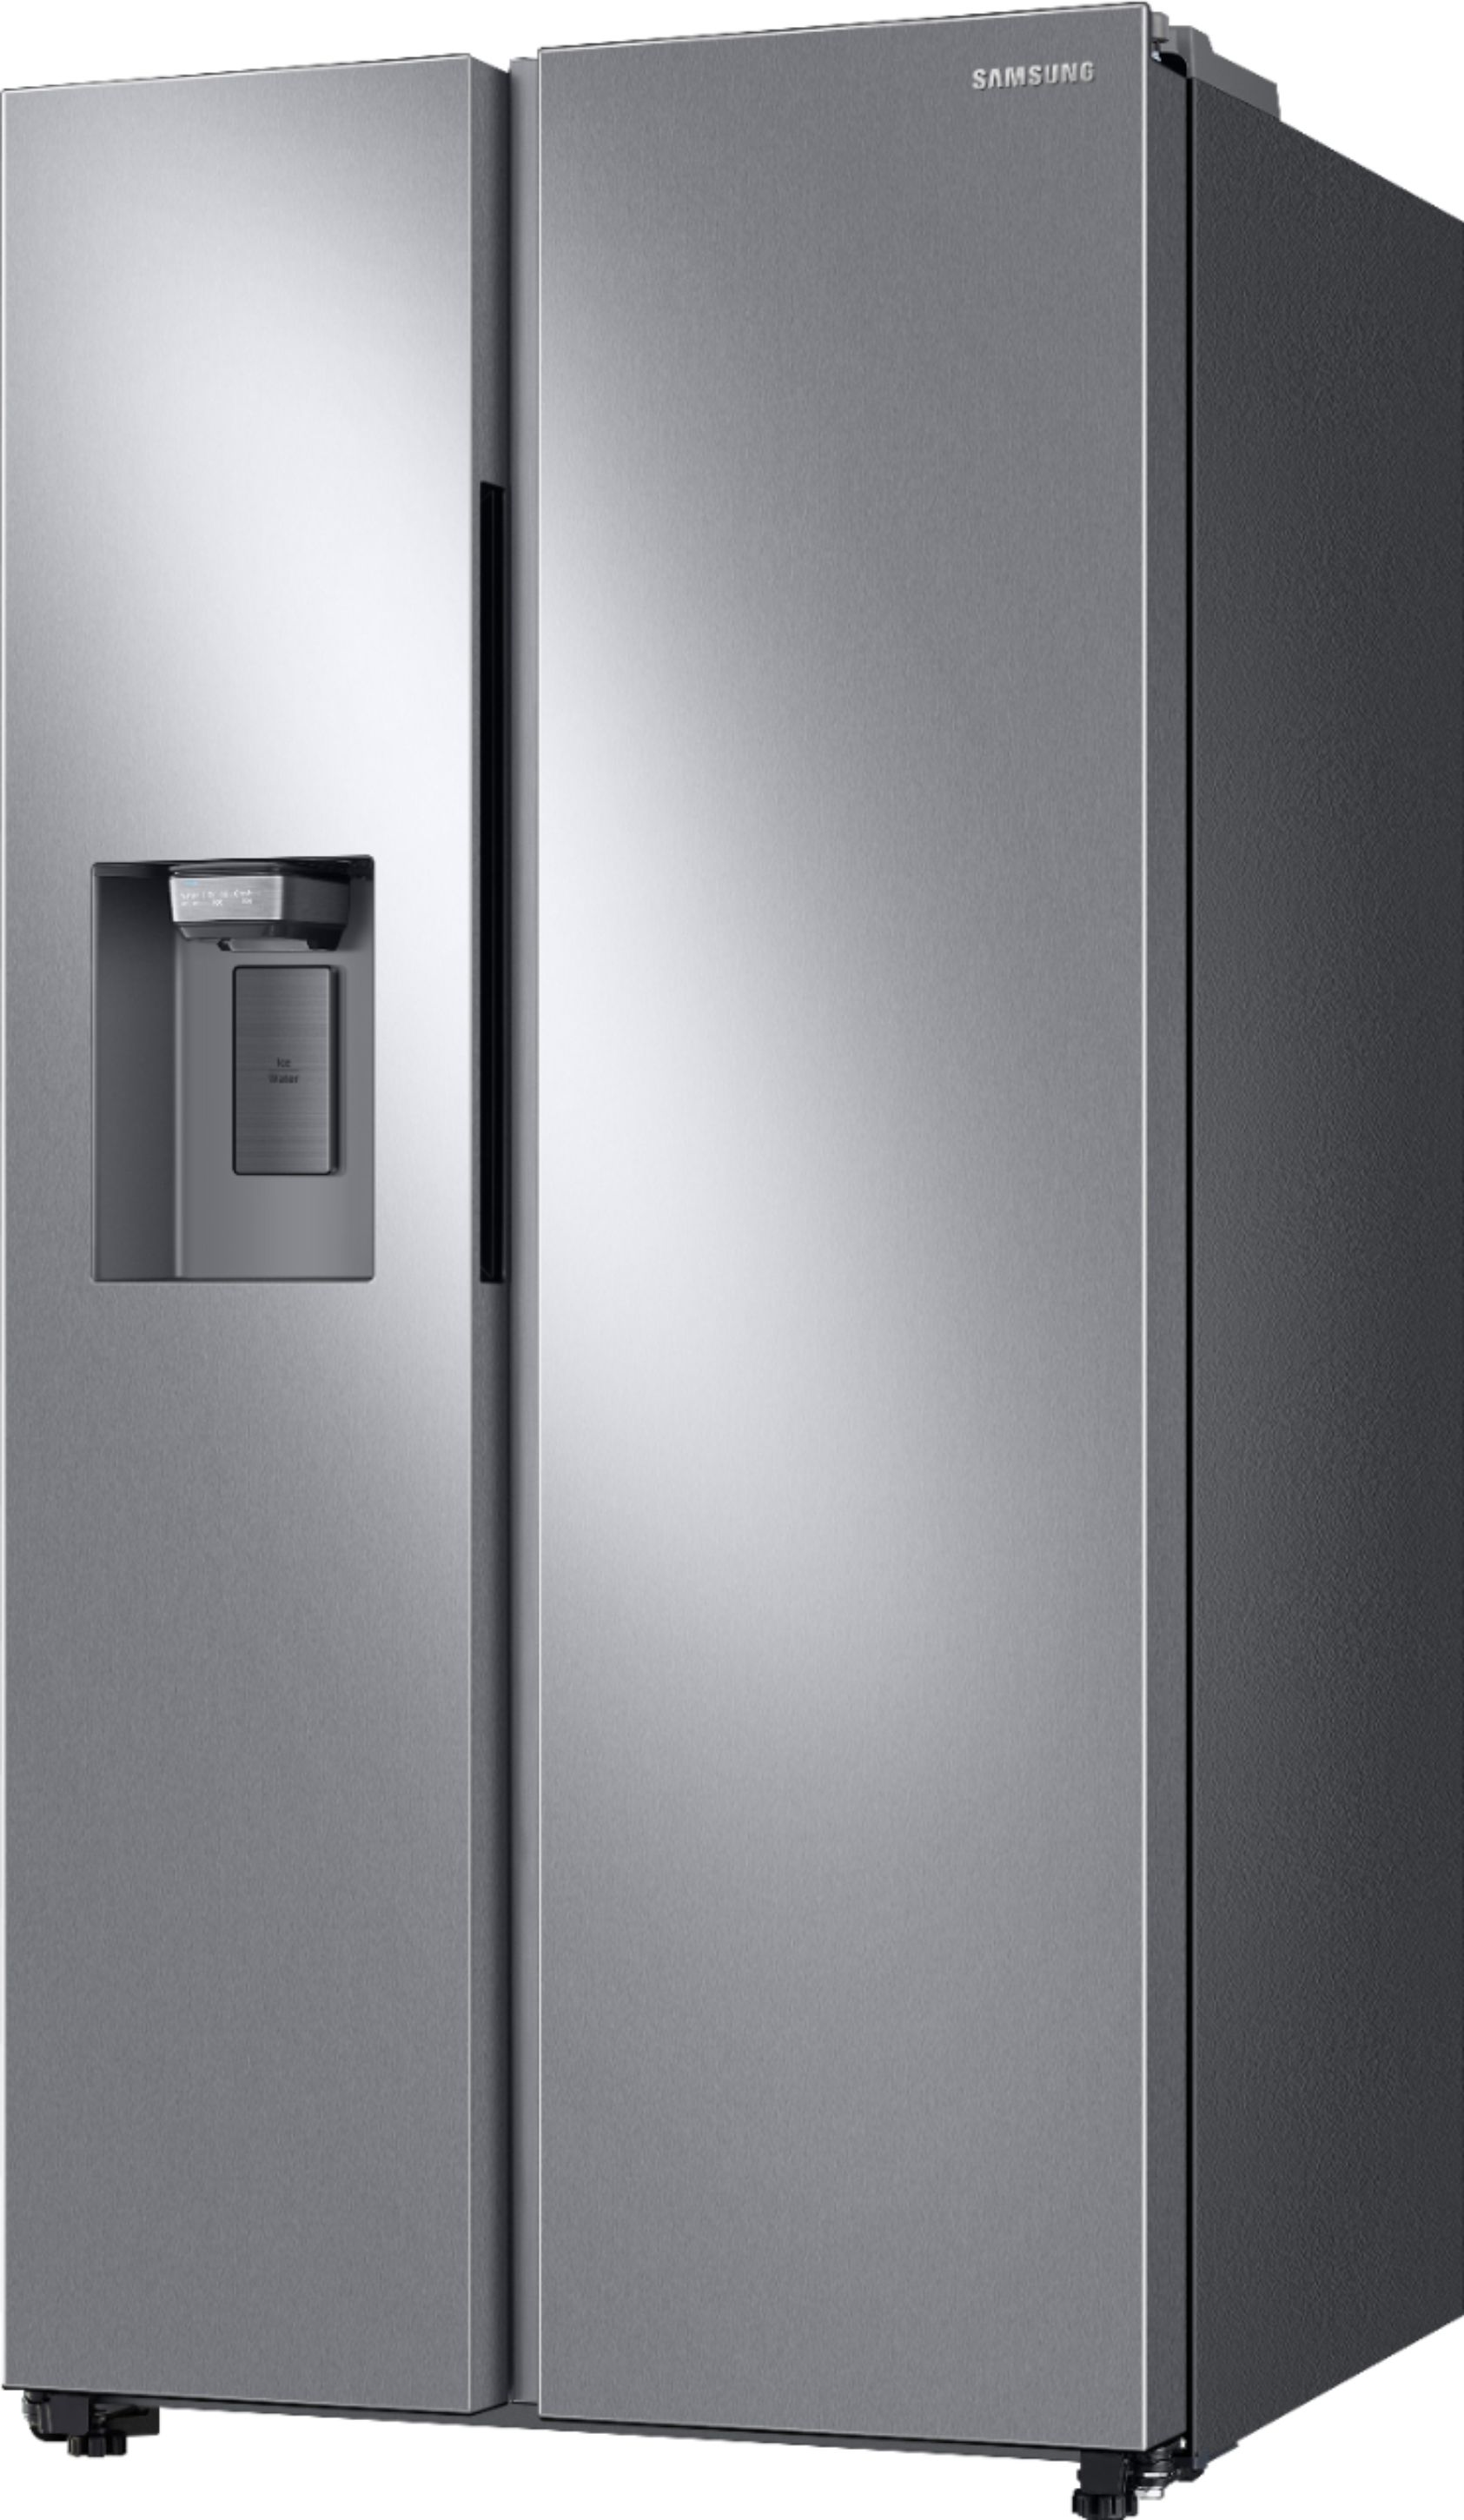 Left View: Samsung - Bespoke 12.0 cu. ft. Bottom Freezer refrigerator - White glass